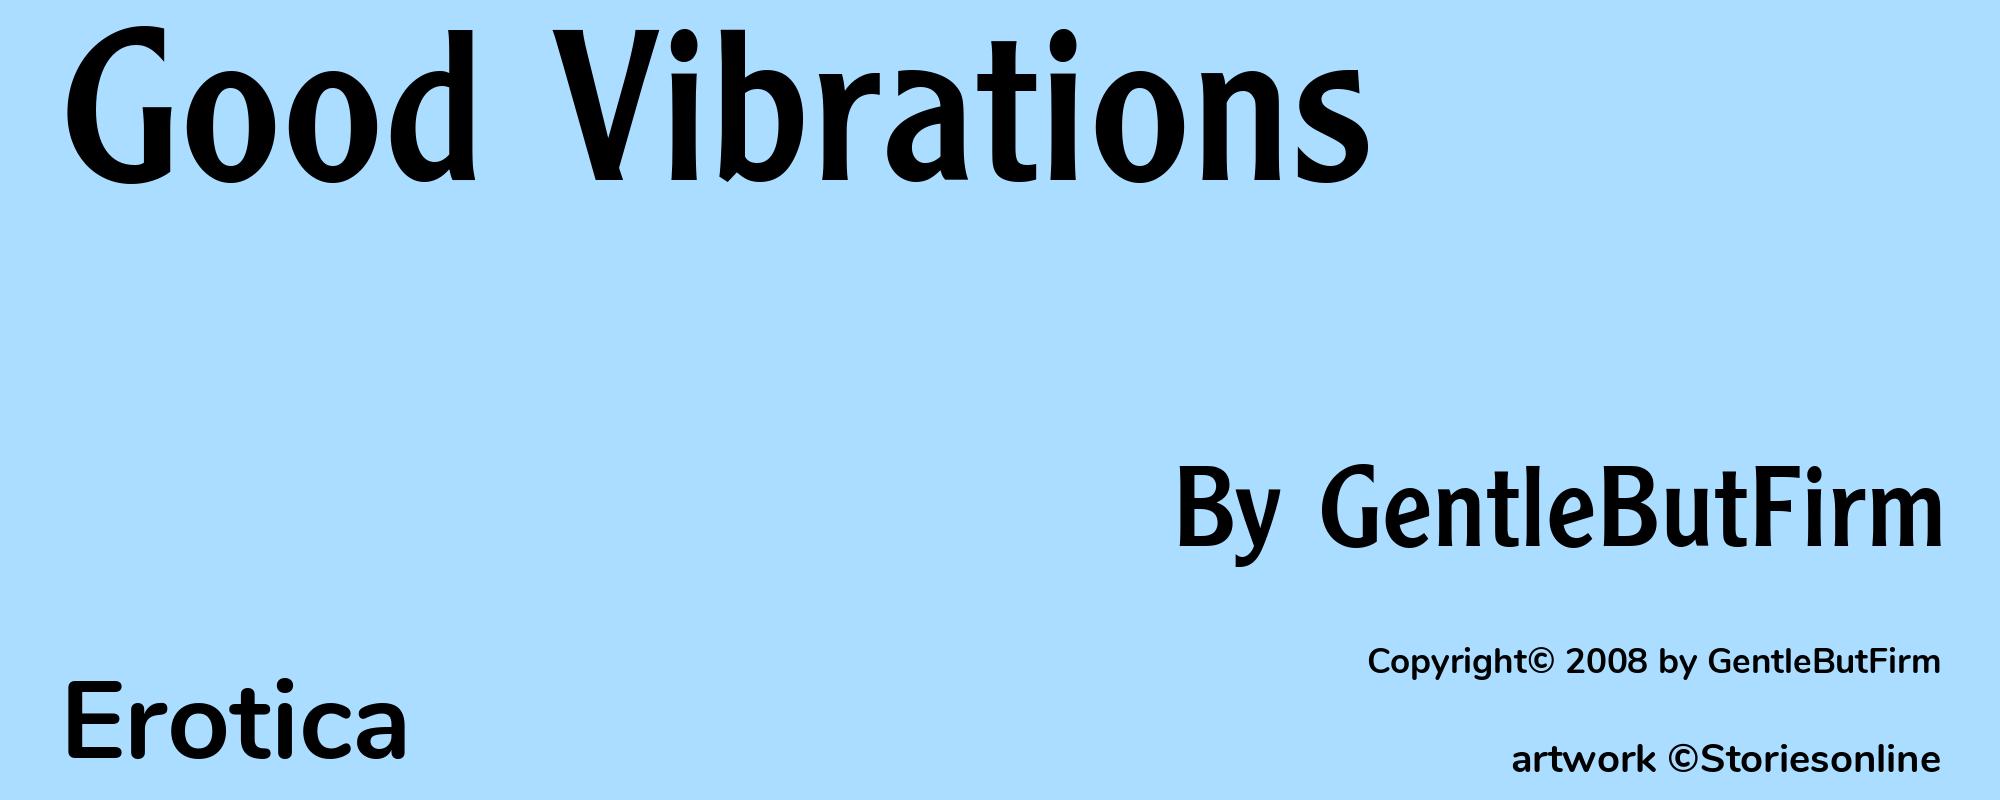 Good Vibrations - Cover